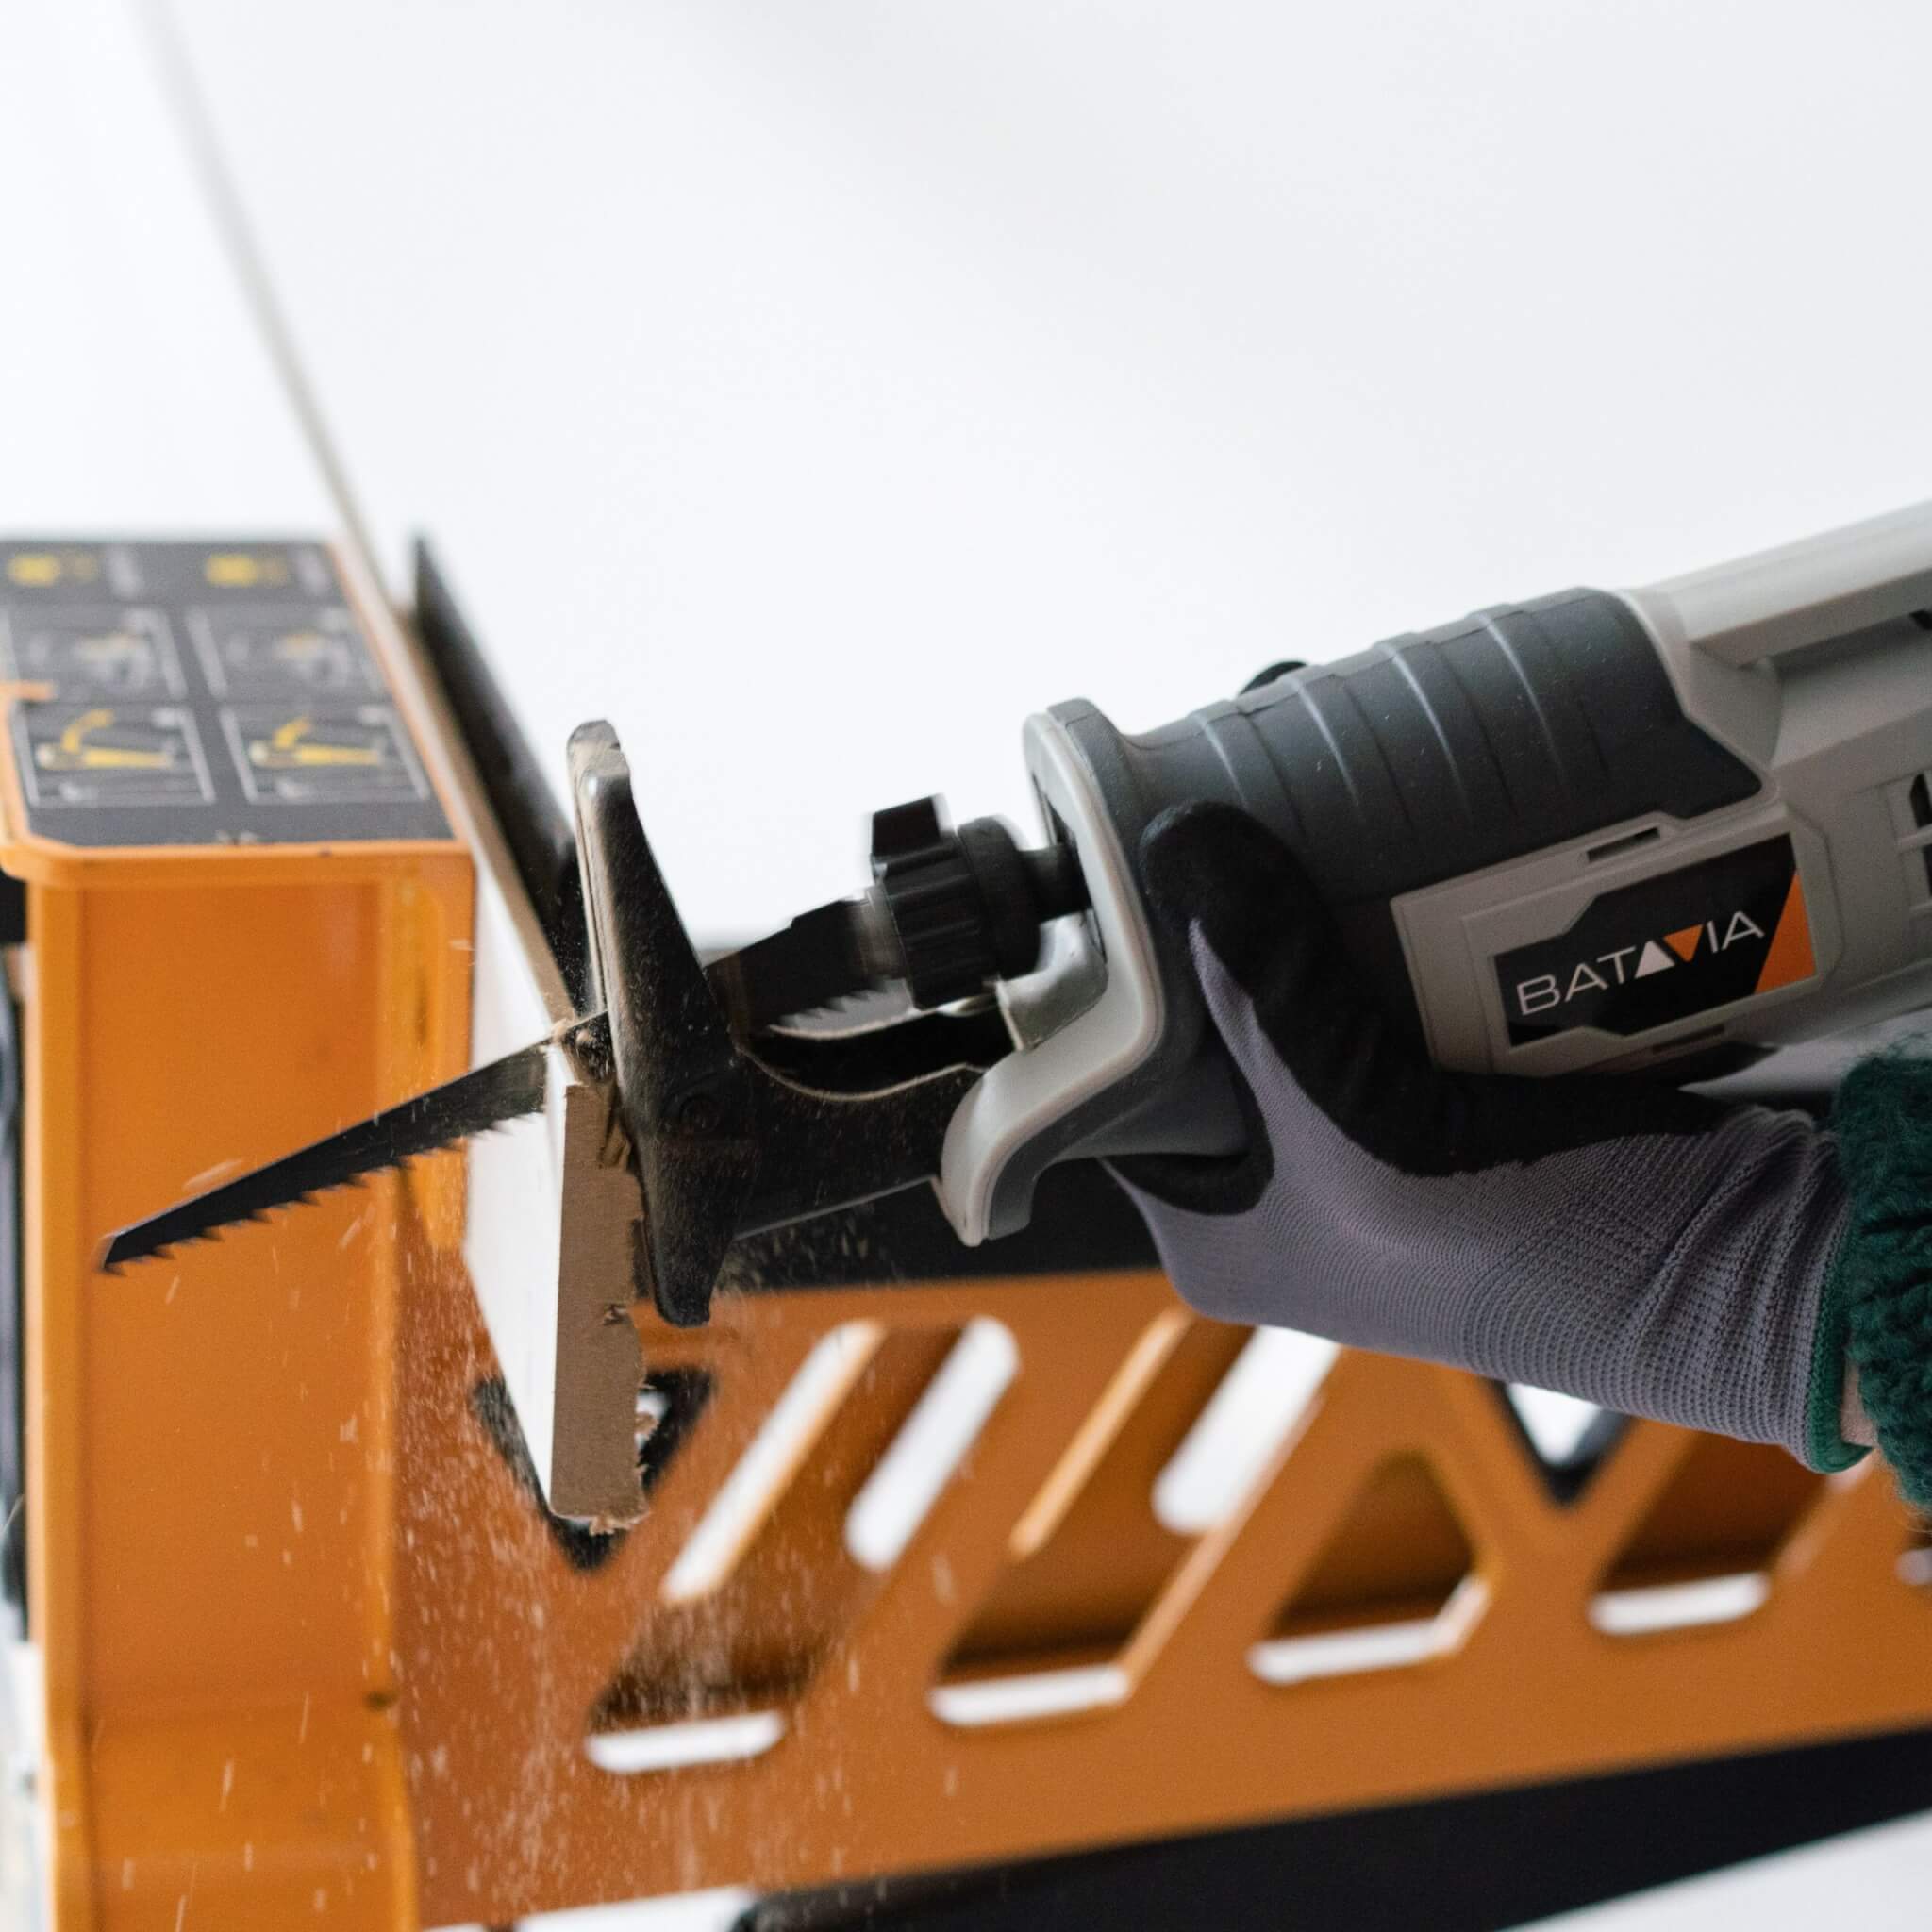 18V Reciprocating saw | Maxxpack collection | Batavia